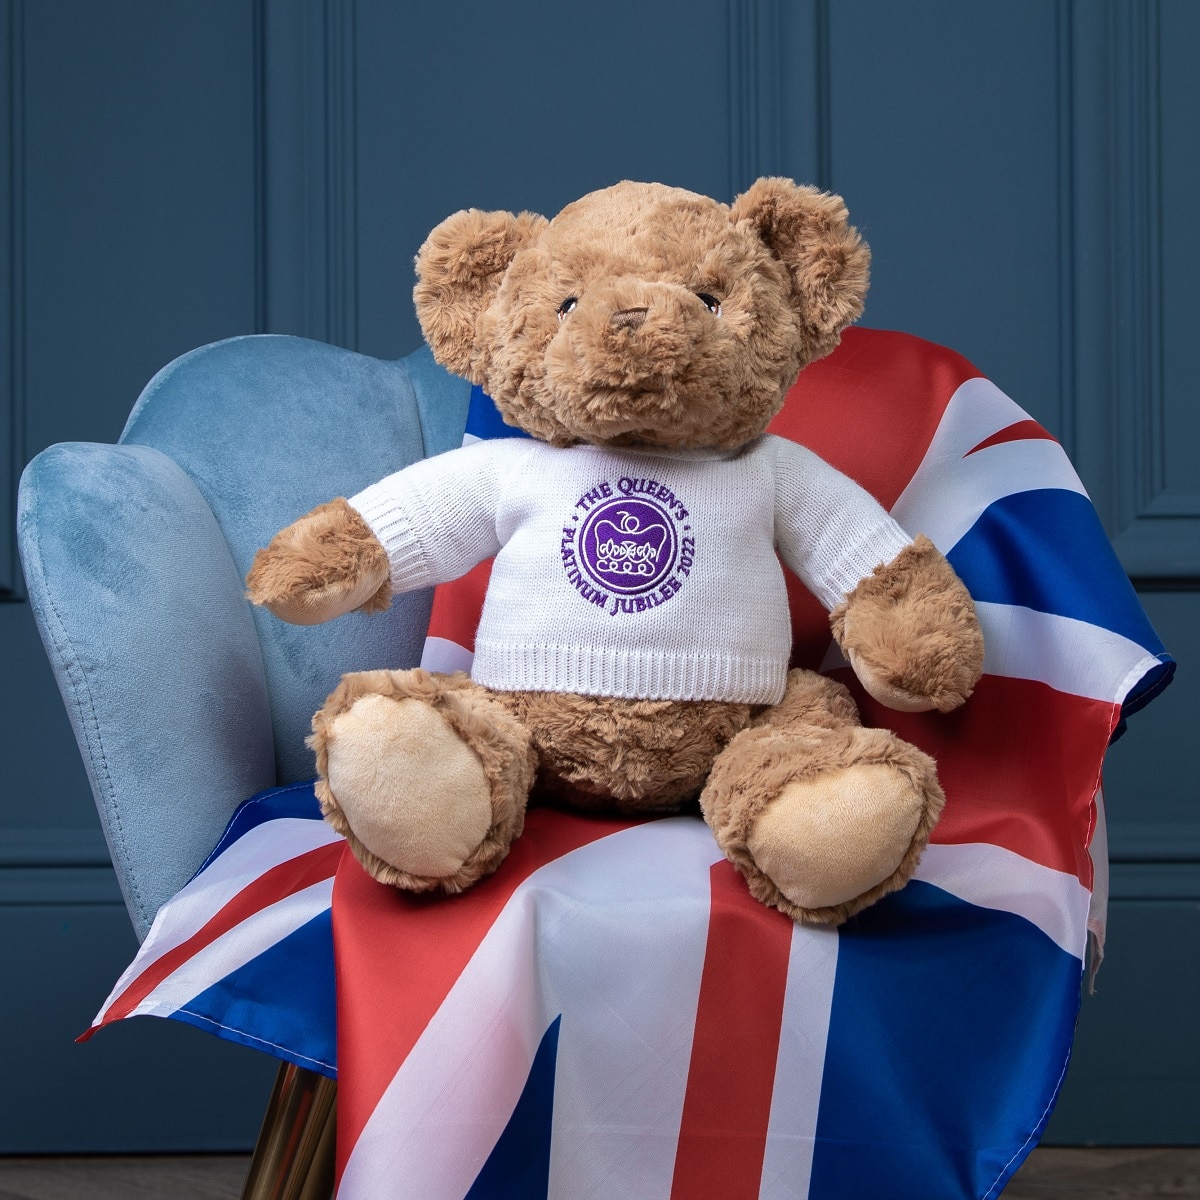 Queen Elizabeth II platinum jubilee 2022 collectable large teddy bear